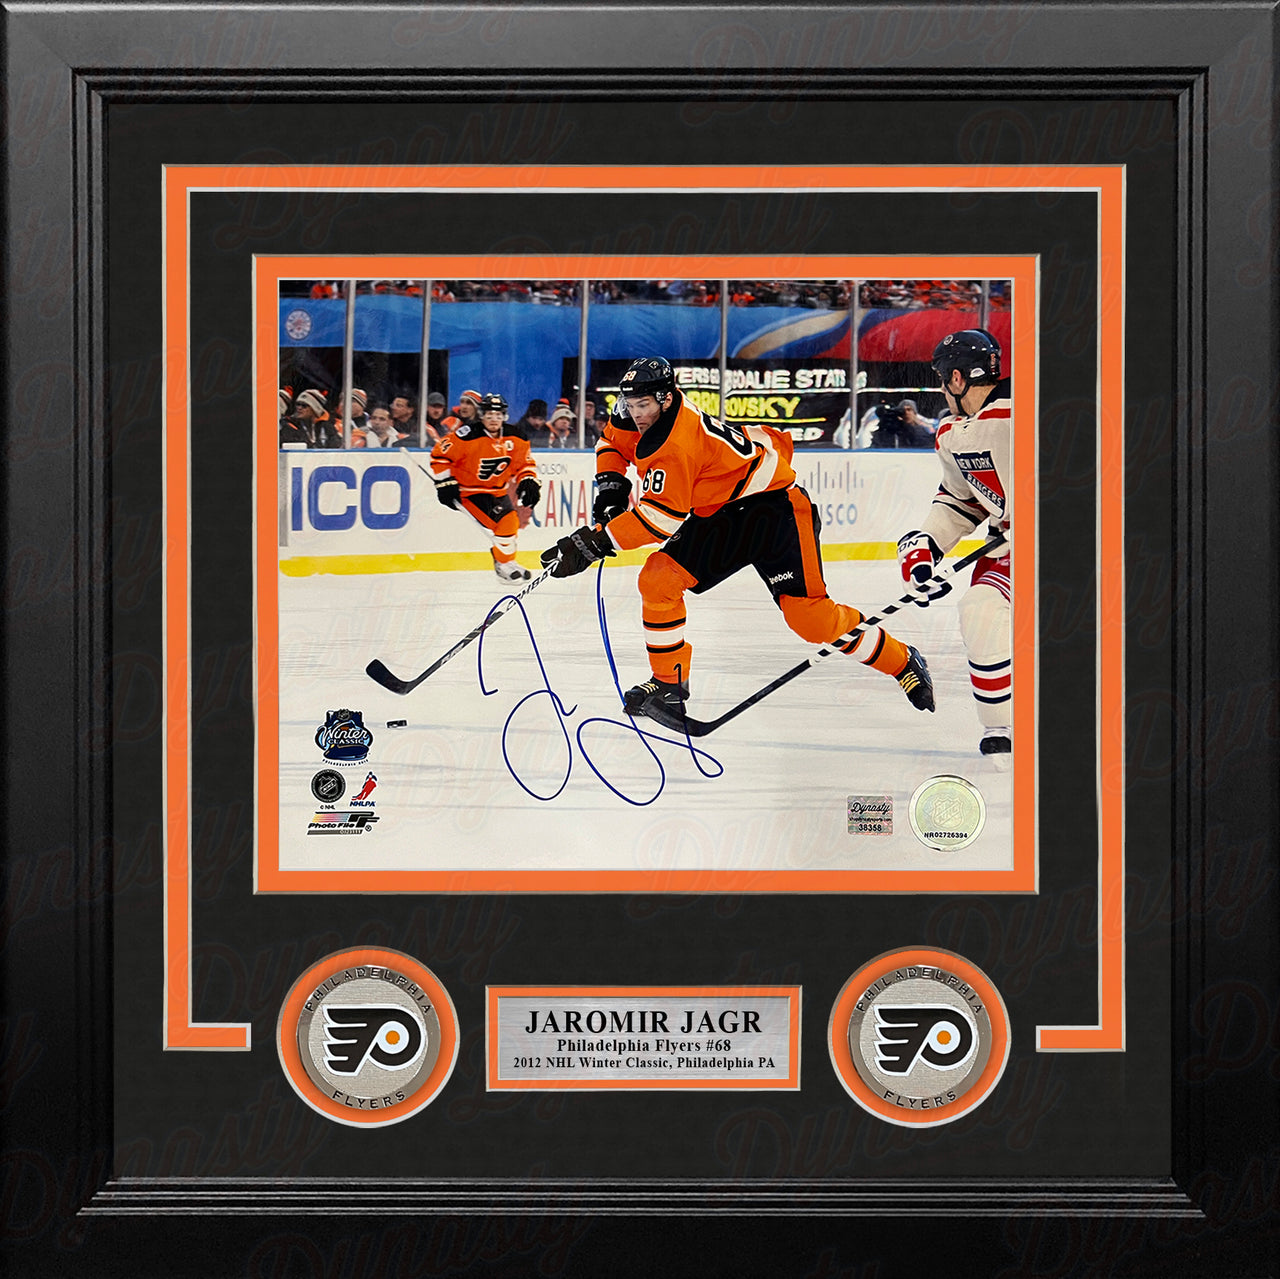 Jaromir Jagr 2012 Winter Classic Philadelphia Flyers Autographed 8" x 10" Framed Hockey Photo - Dynasty Sports & Framing 